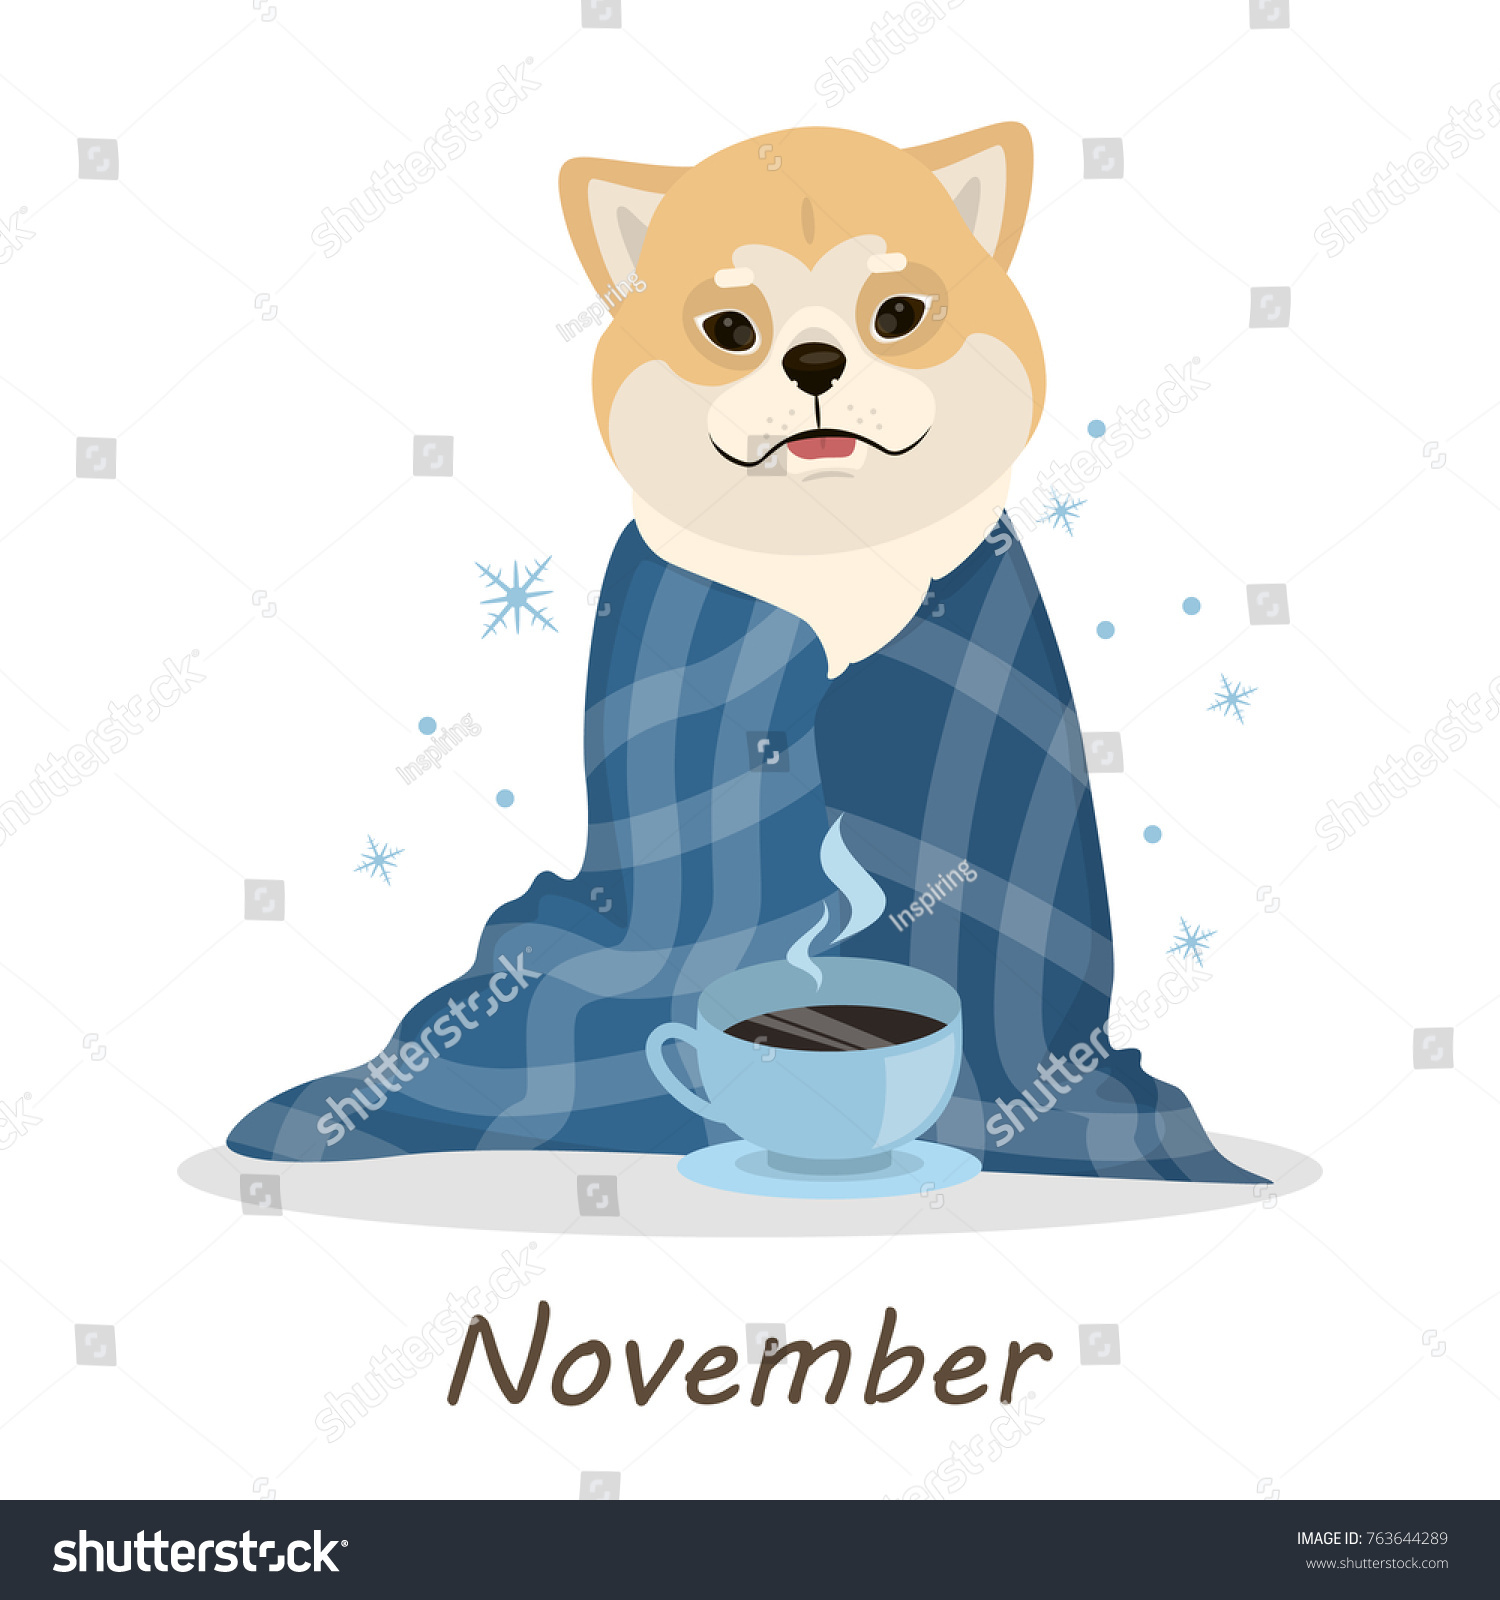 Shiba Inu Dogs Calendar November Month Stock Vector Royalty Free 763644289